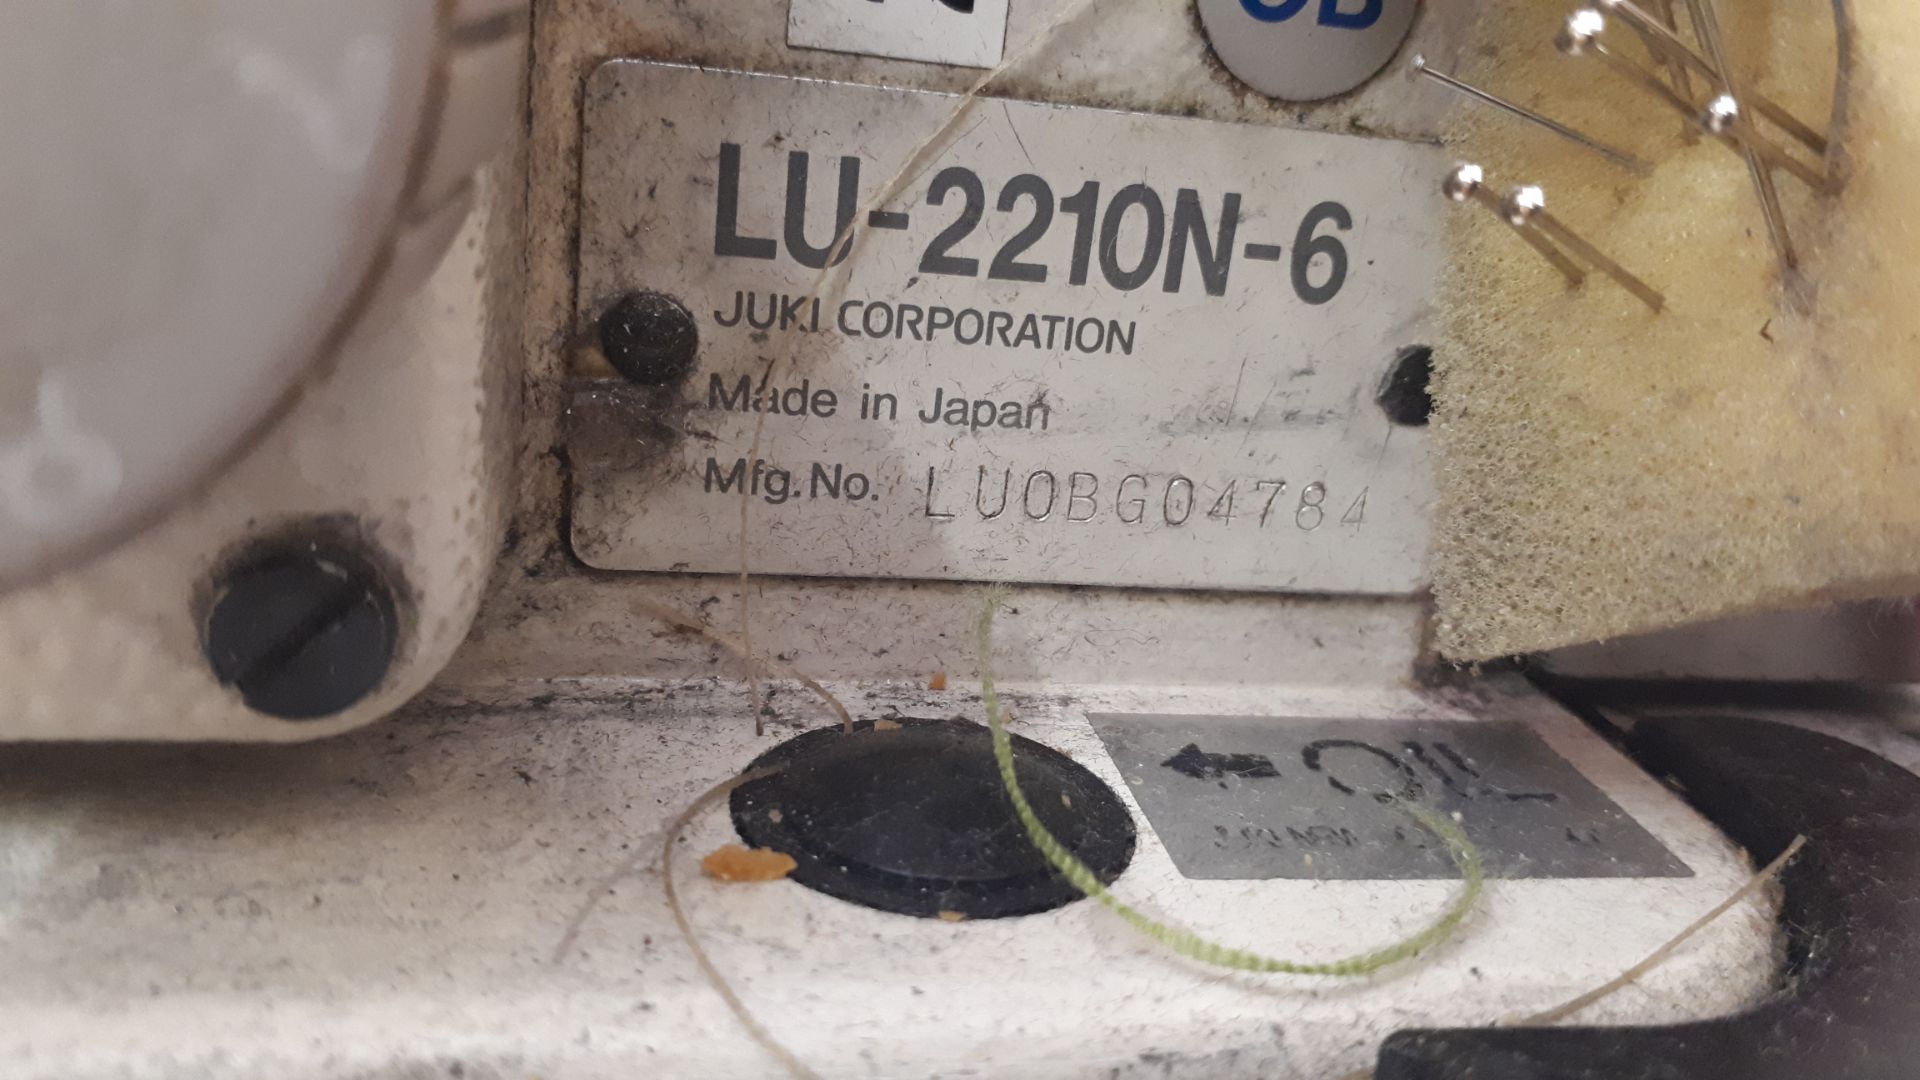 Juki LU 2210N-6 single needle high speed lockstitch machine with Efka 810 stitch box - Image 3 of 3